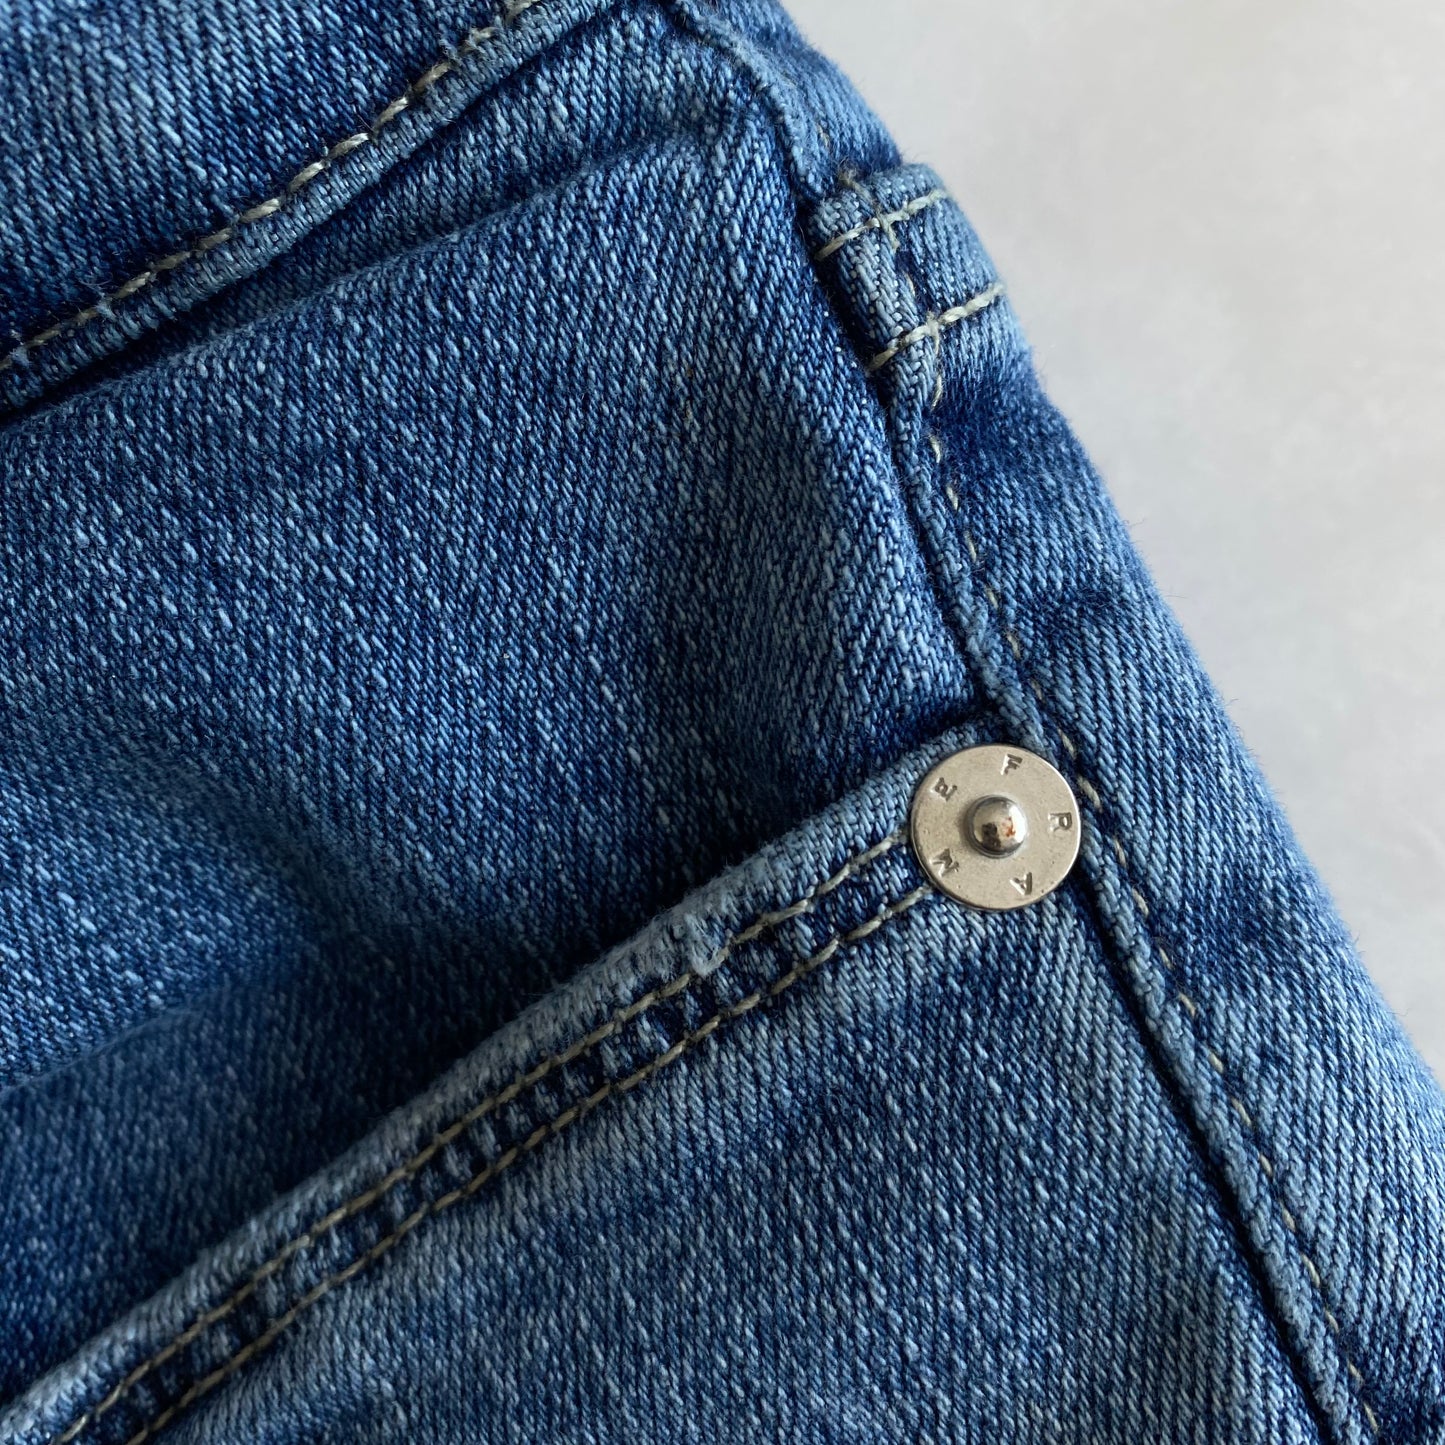 FRAME Le Garcon Straight Blue Denim Jeans Size 28